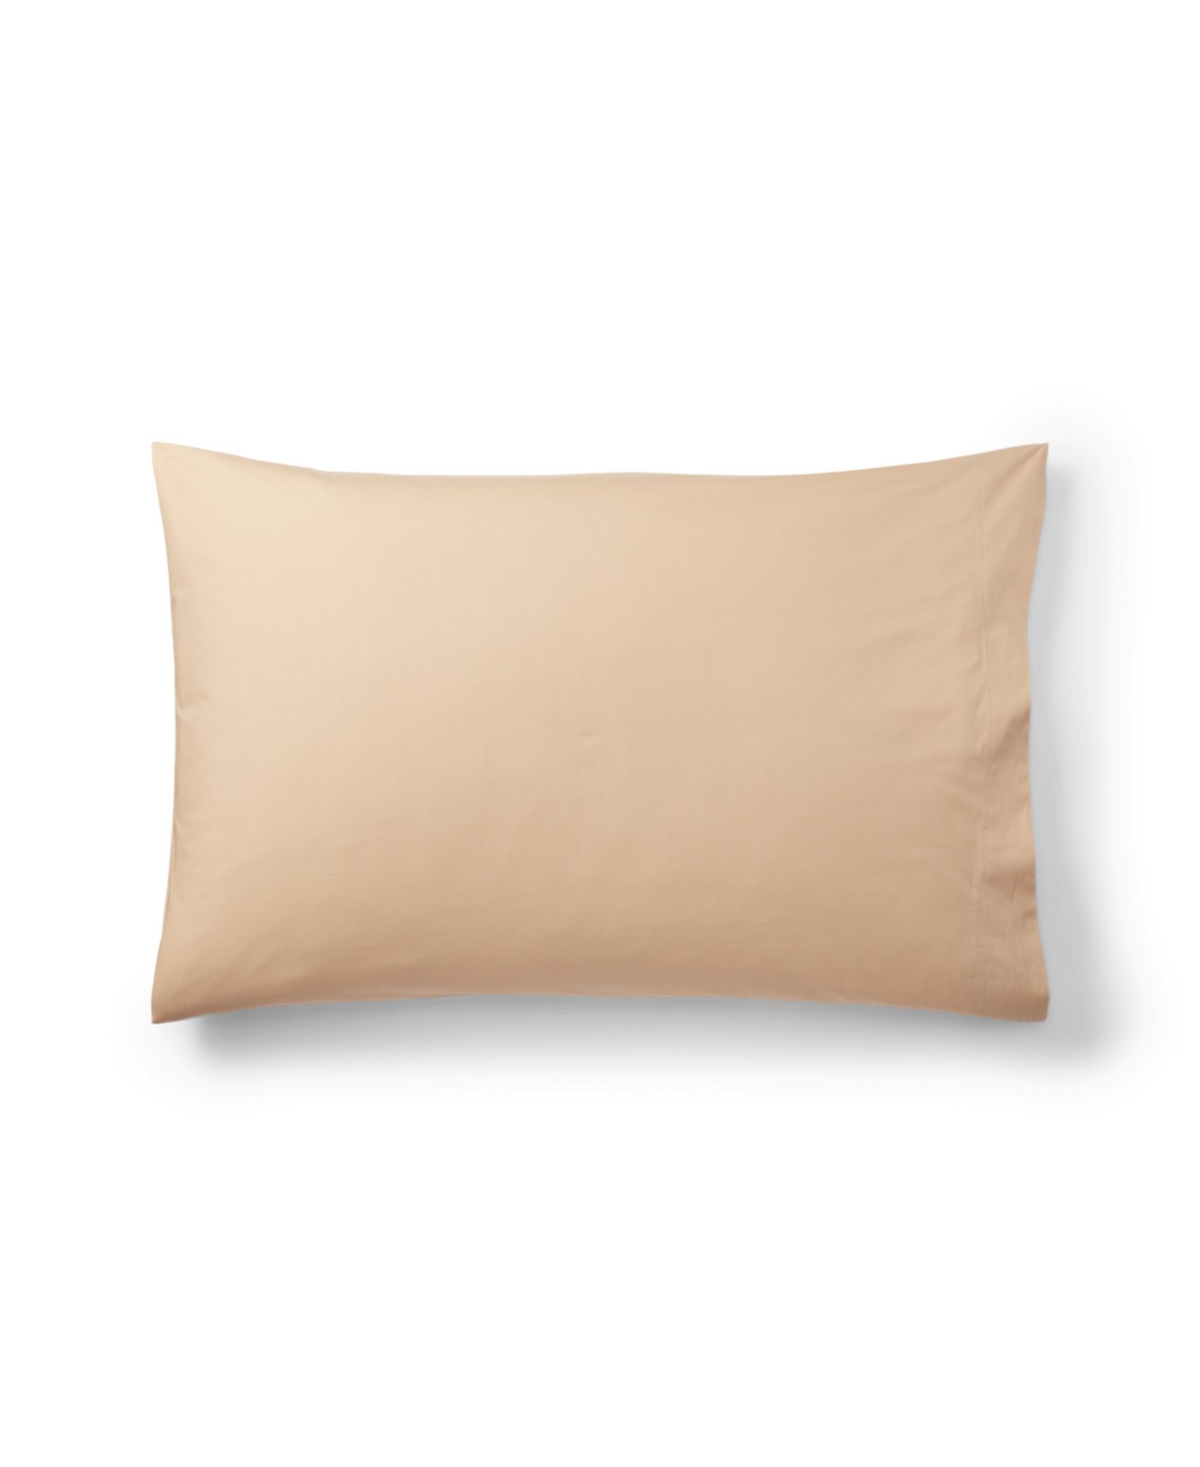 Lauren Ralph Lauren Sloane Anti-microbial Pillowcase Pair, Standard In Hemp